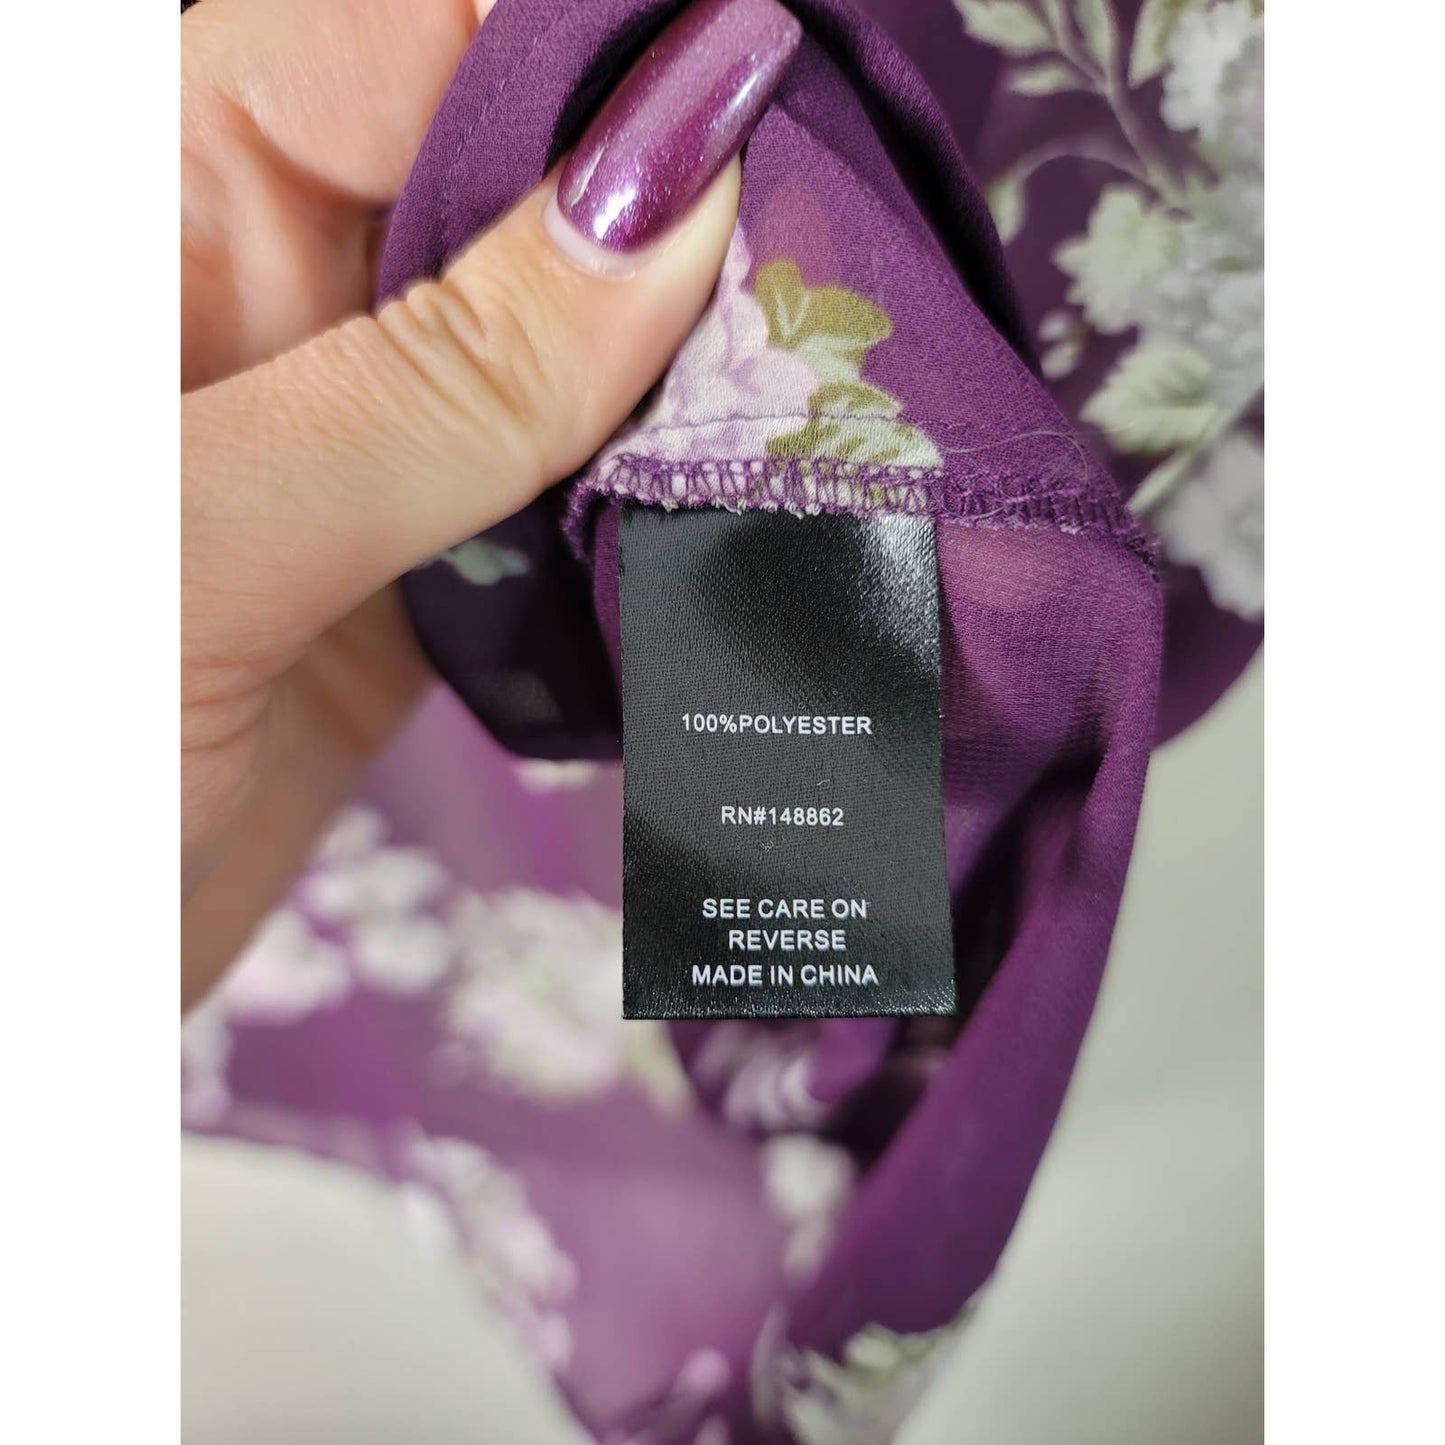 Torrid Blouse Purple Floral High Low Button Semi Sheer Plus Size 1/1X